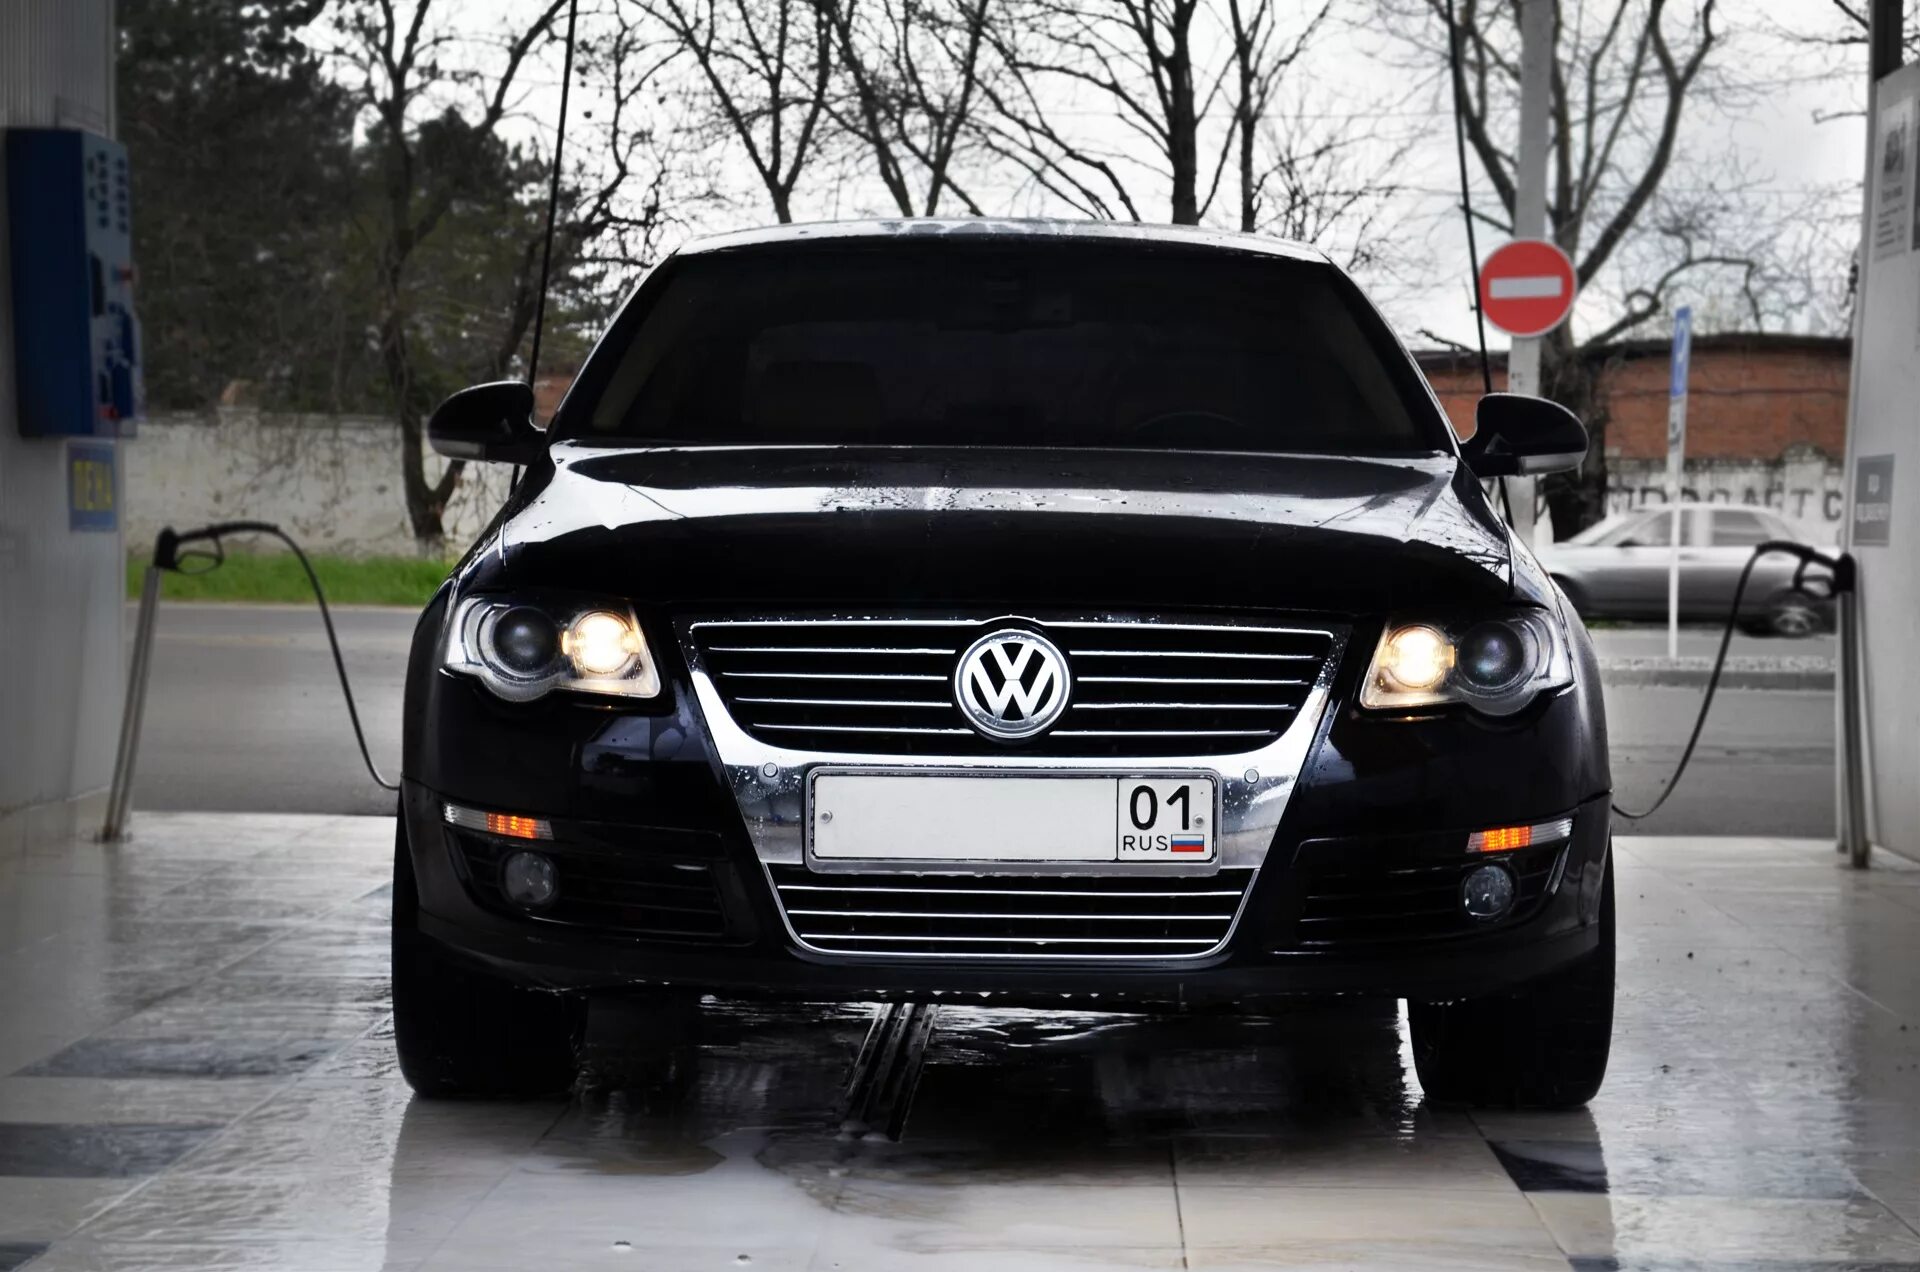 Фольксваген Пассат б6. Volkswagen Passat b6 Black Tuning. Тюнингованный Пассат б6. Тюнингованный Фольксваген Пассат б6.